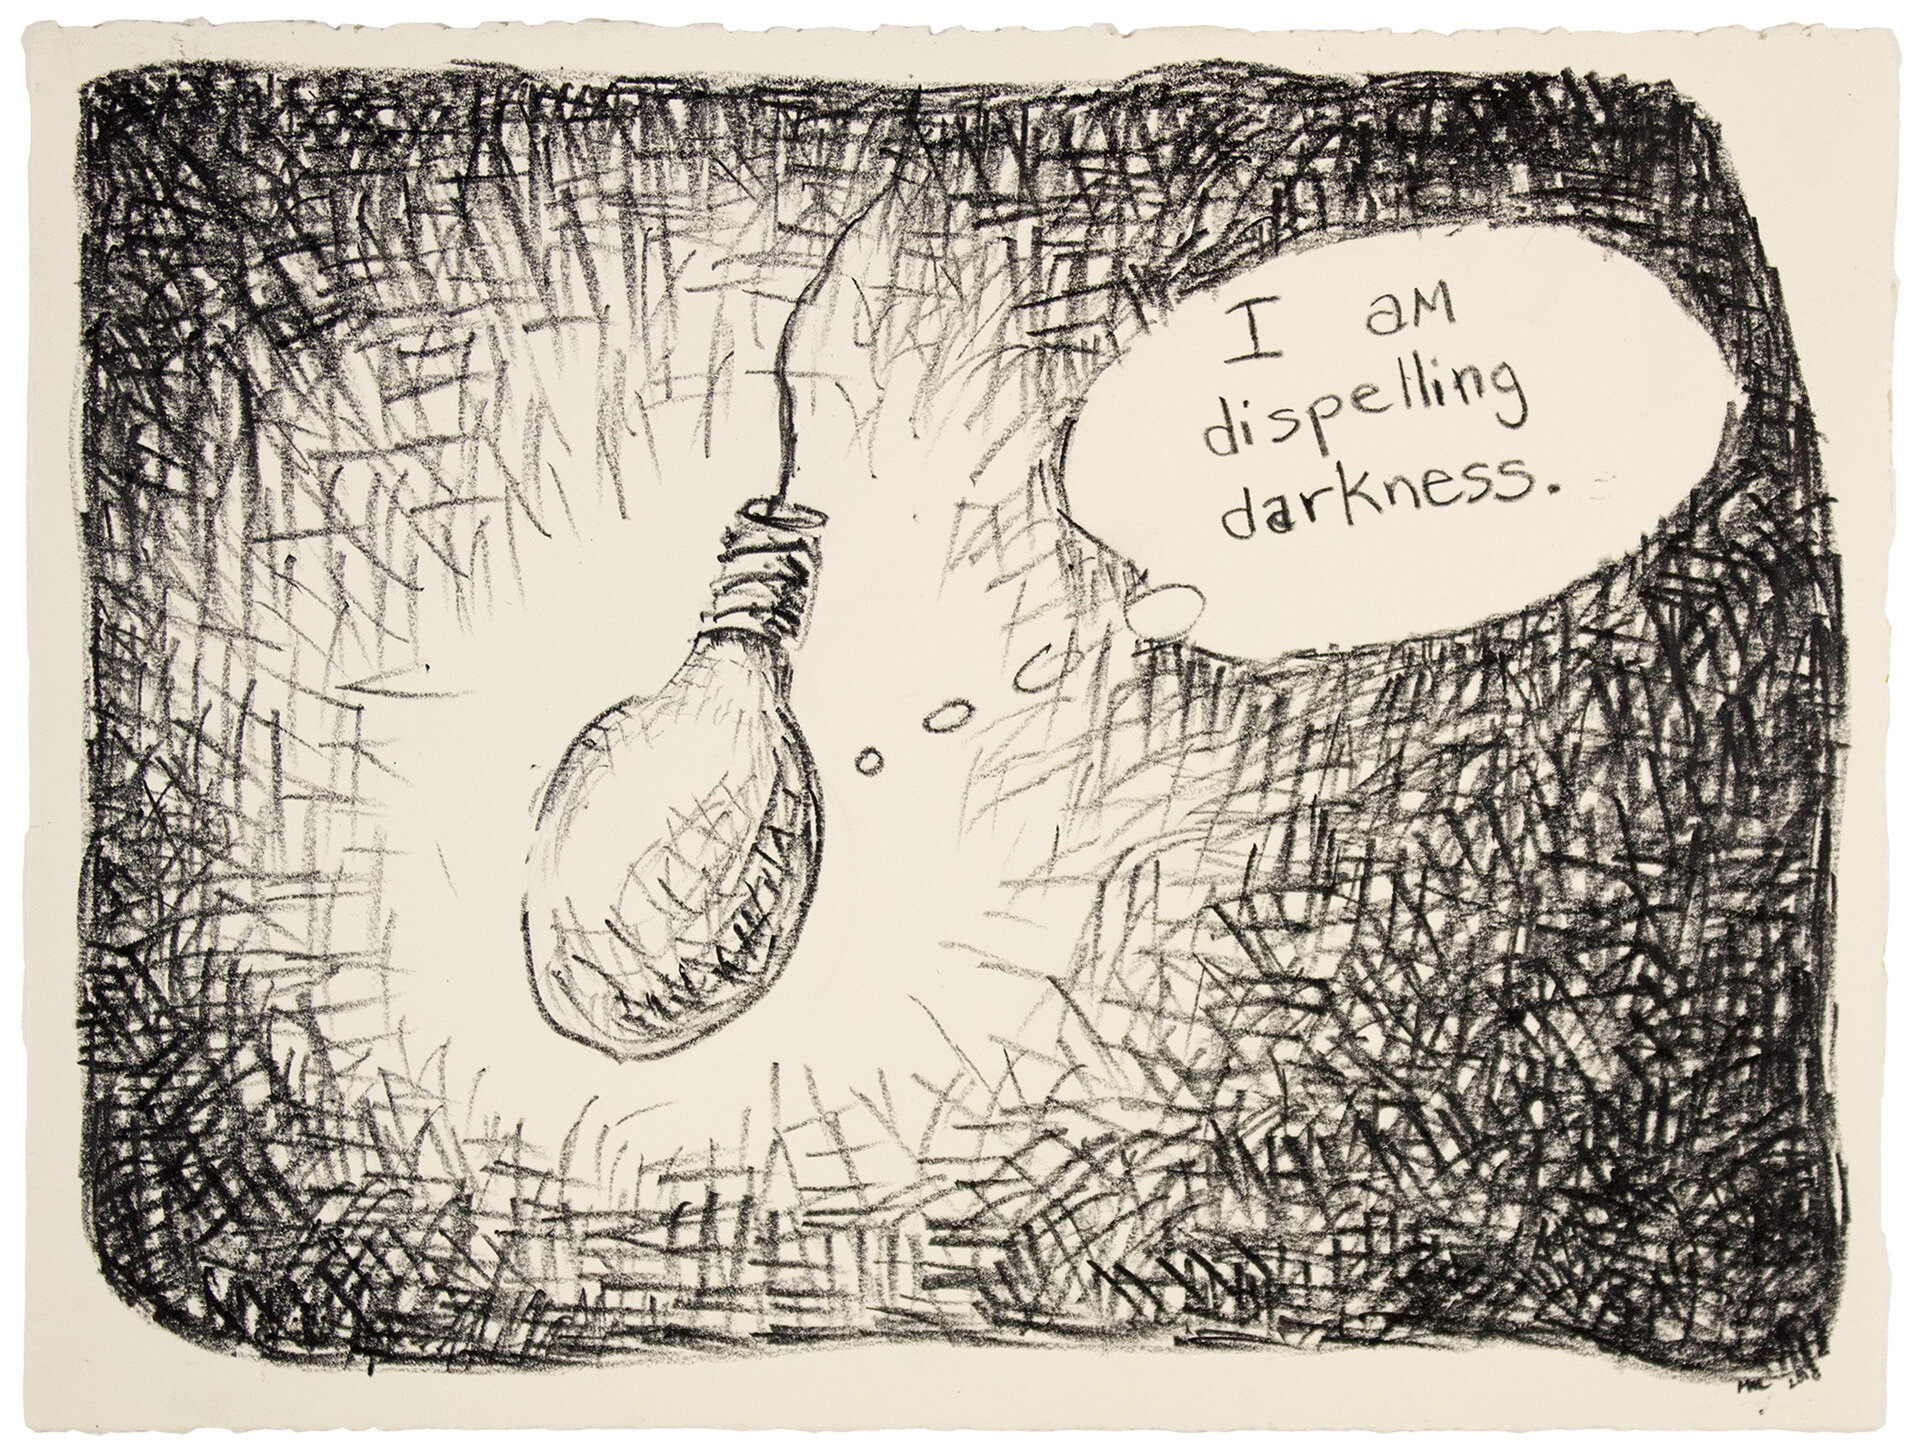 Dispelling darkness